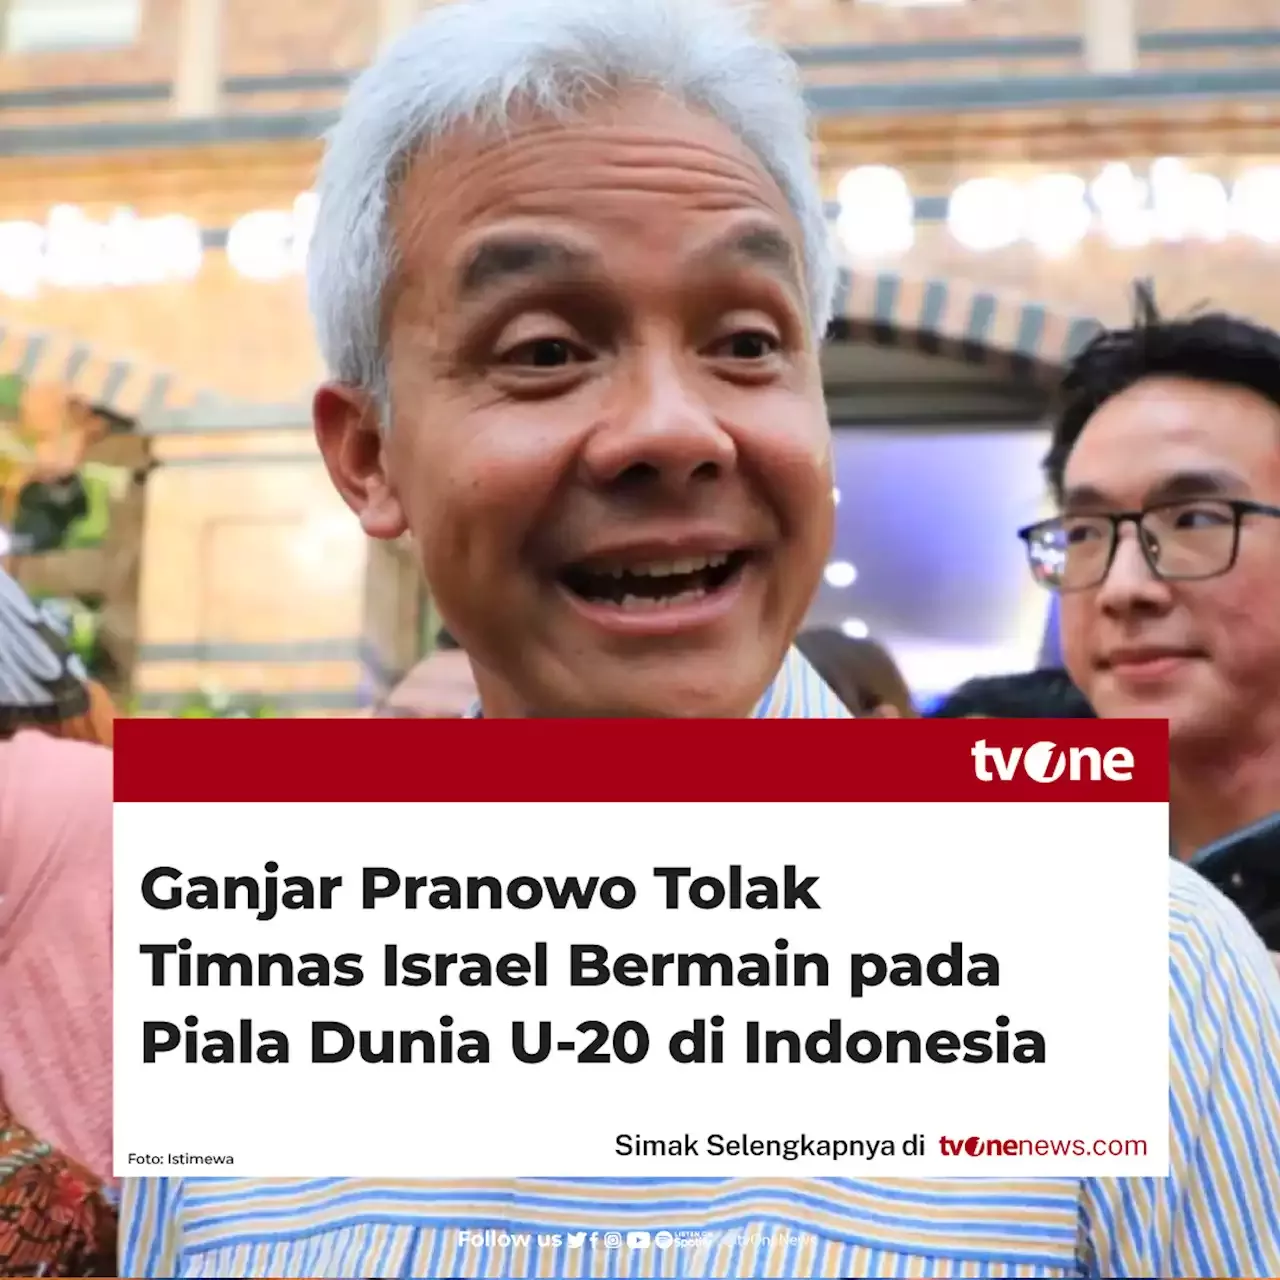 Survei Litbang Kompas: Ganjar Pranowo Diprediksi Kehilangan Dukungan Swing Voters